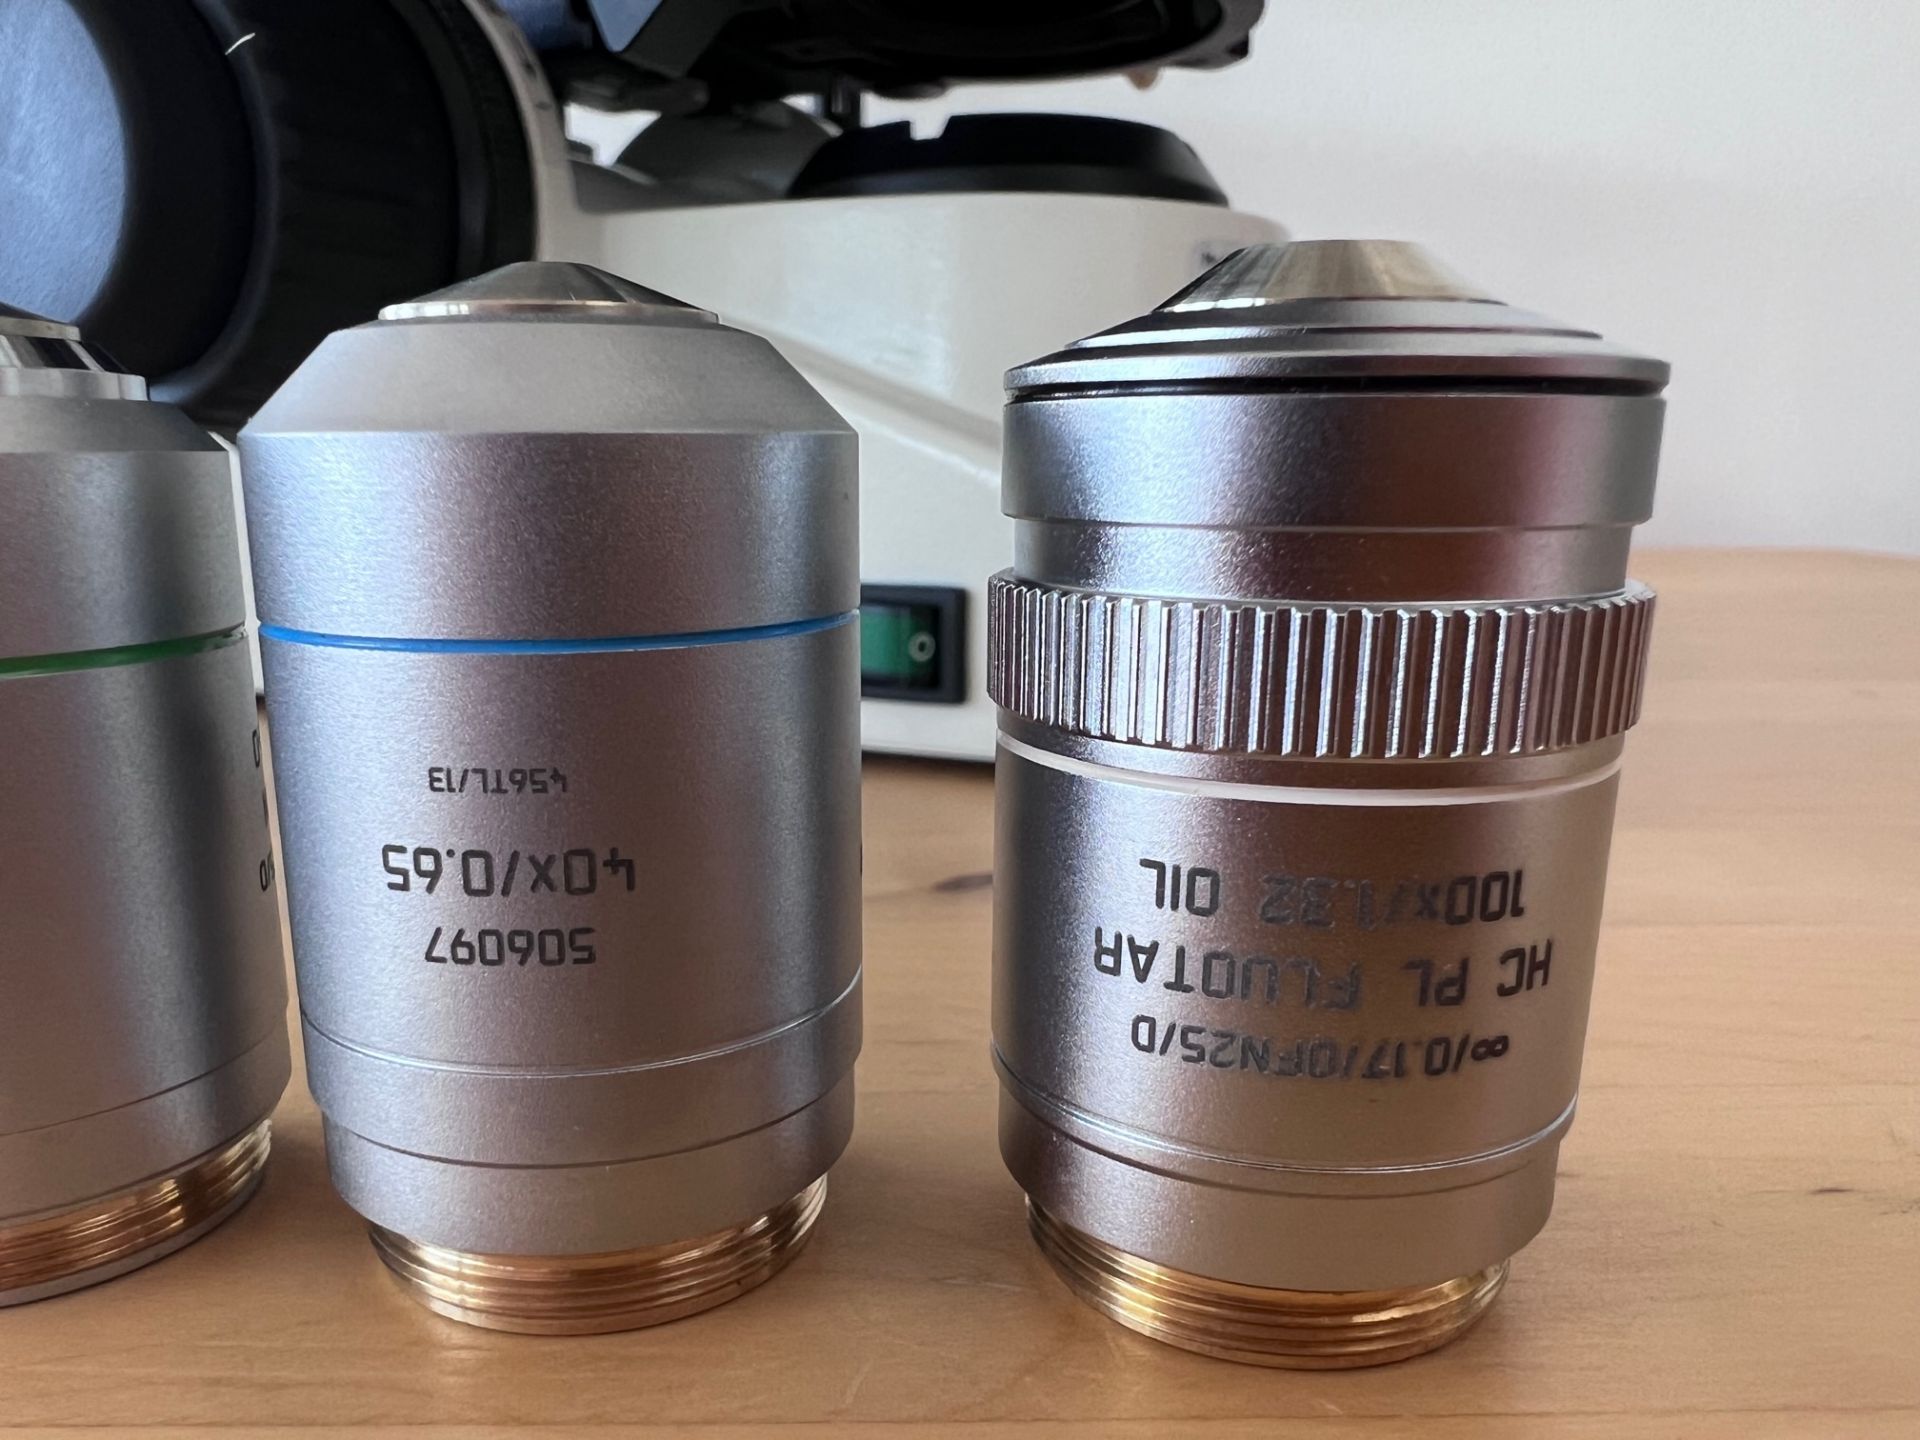 2018 Leica DM2500 LED Optical Microscope w/5 Objectives - Objectives eN Plan 5x/0.12 10x/0.25 20x/0. - Image 19 of 23